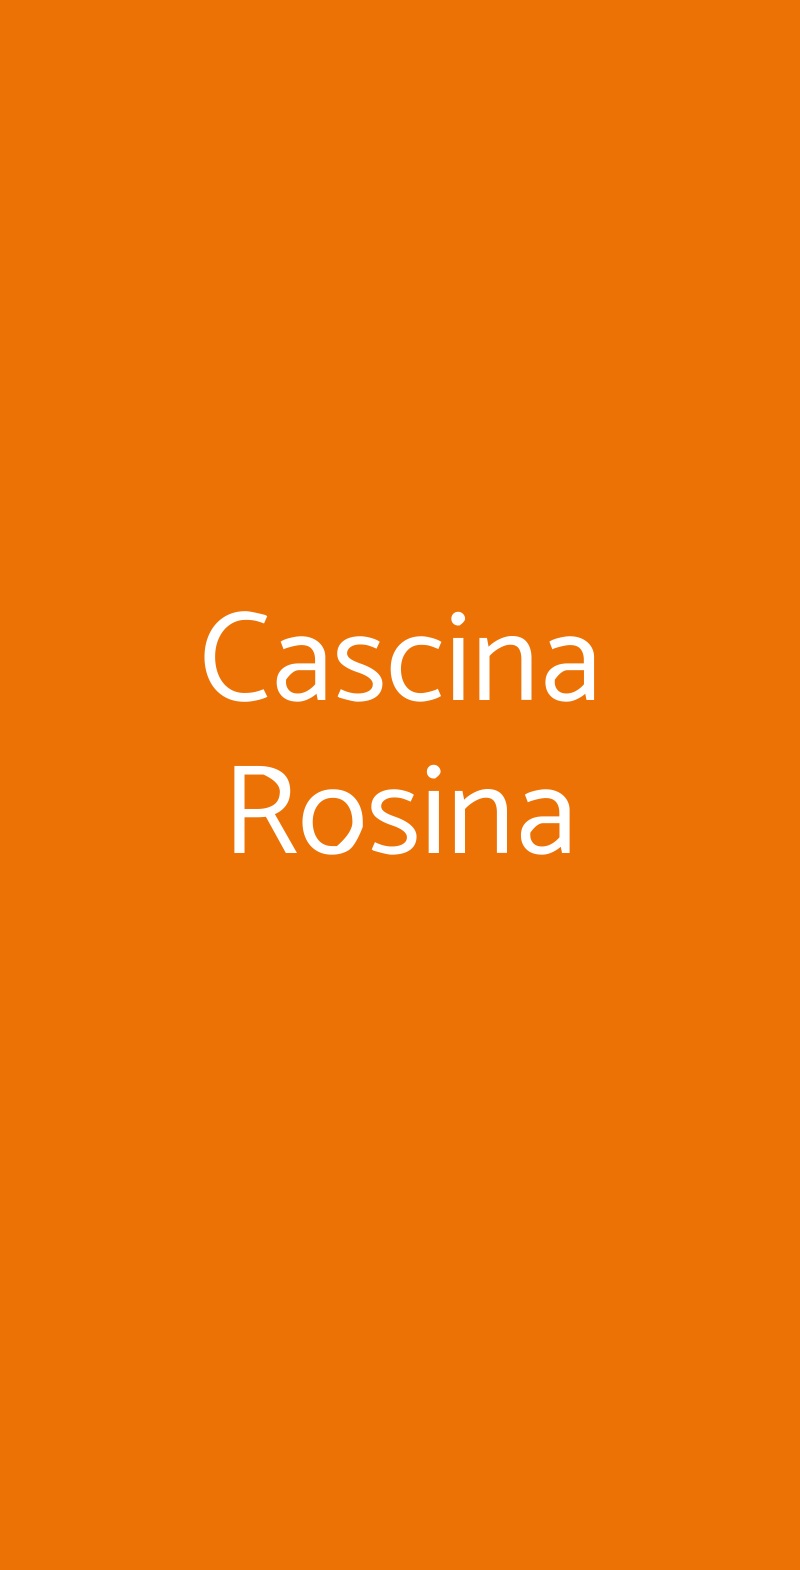 Cascina Rosina Truccazzano menù 1 pagina